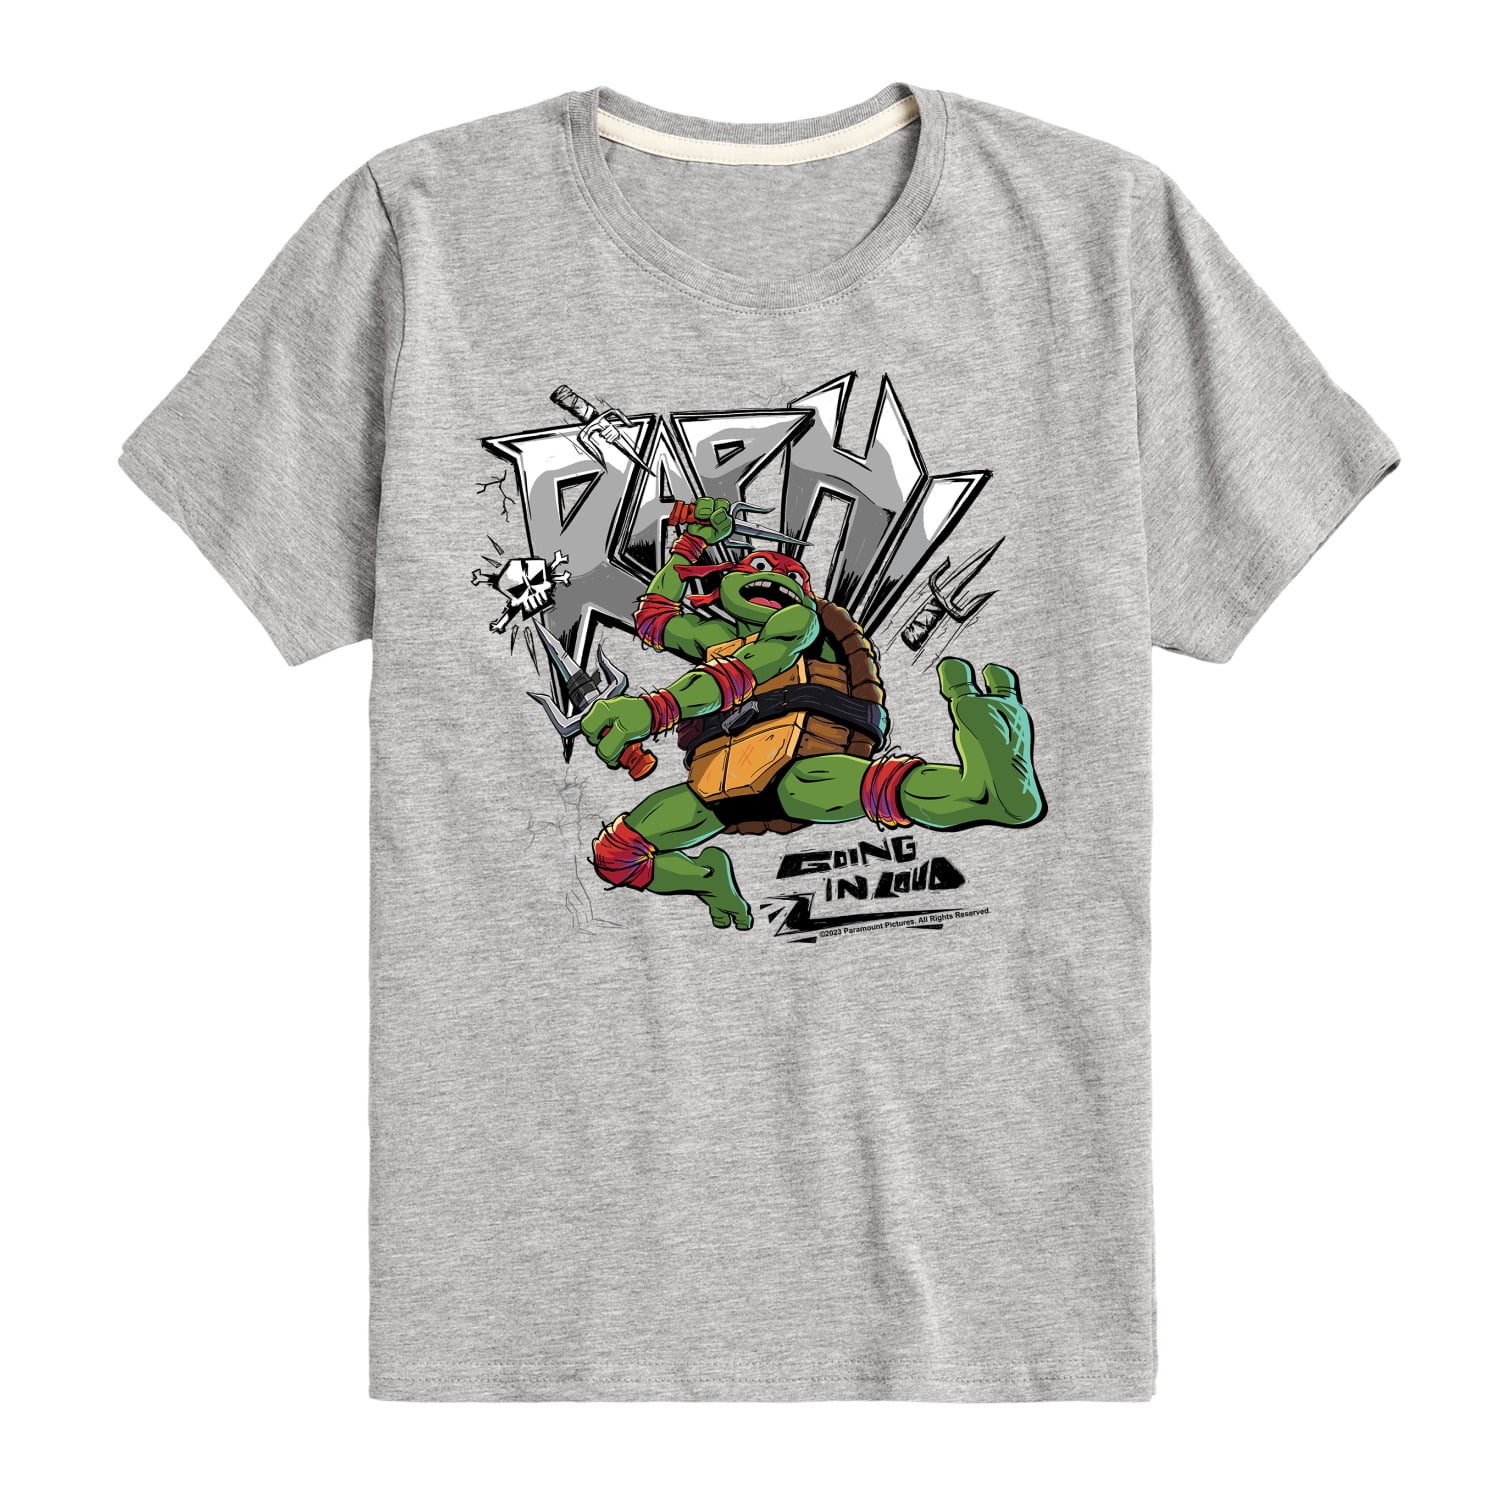 Teenage Mutant Ninja Turtles Tmnt Raphael - Men's Long Sleeve T-Shirt –  Sons of Gotham